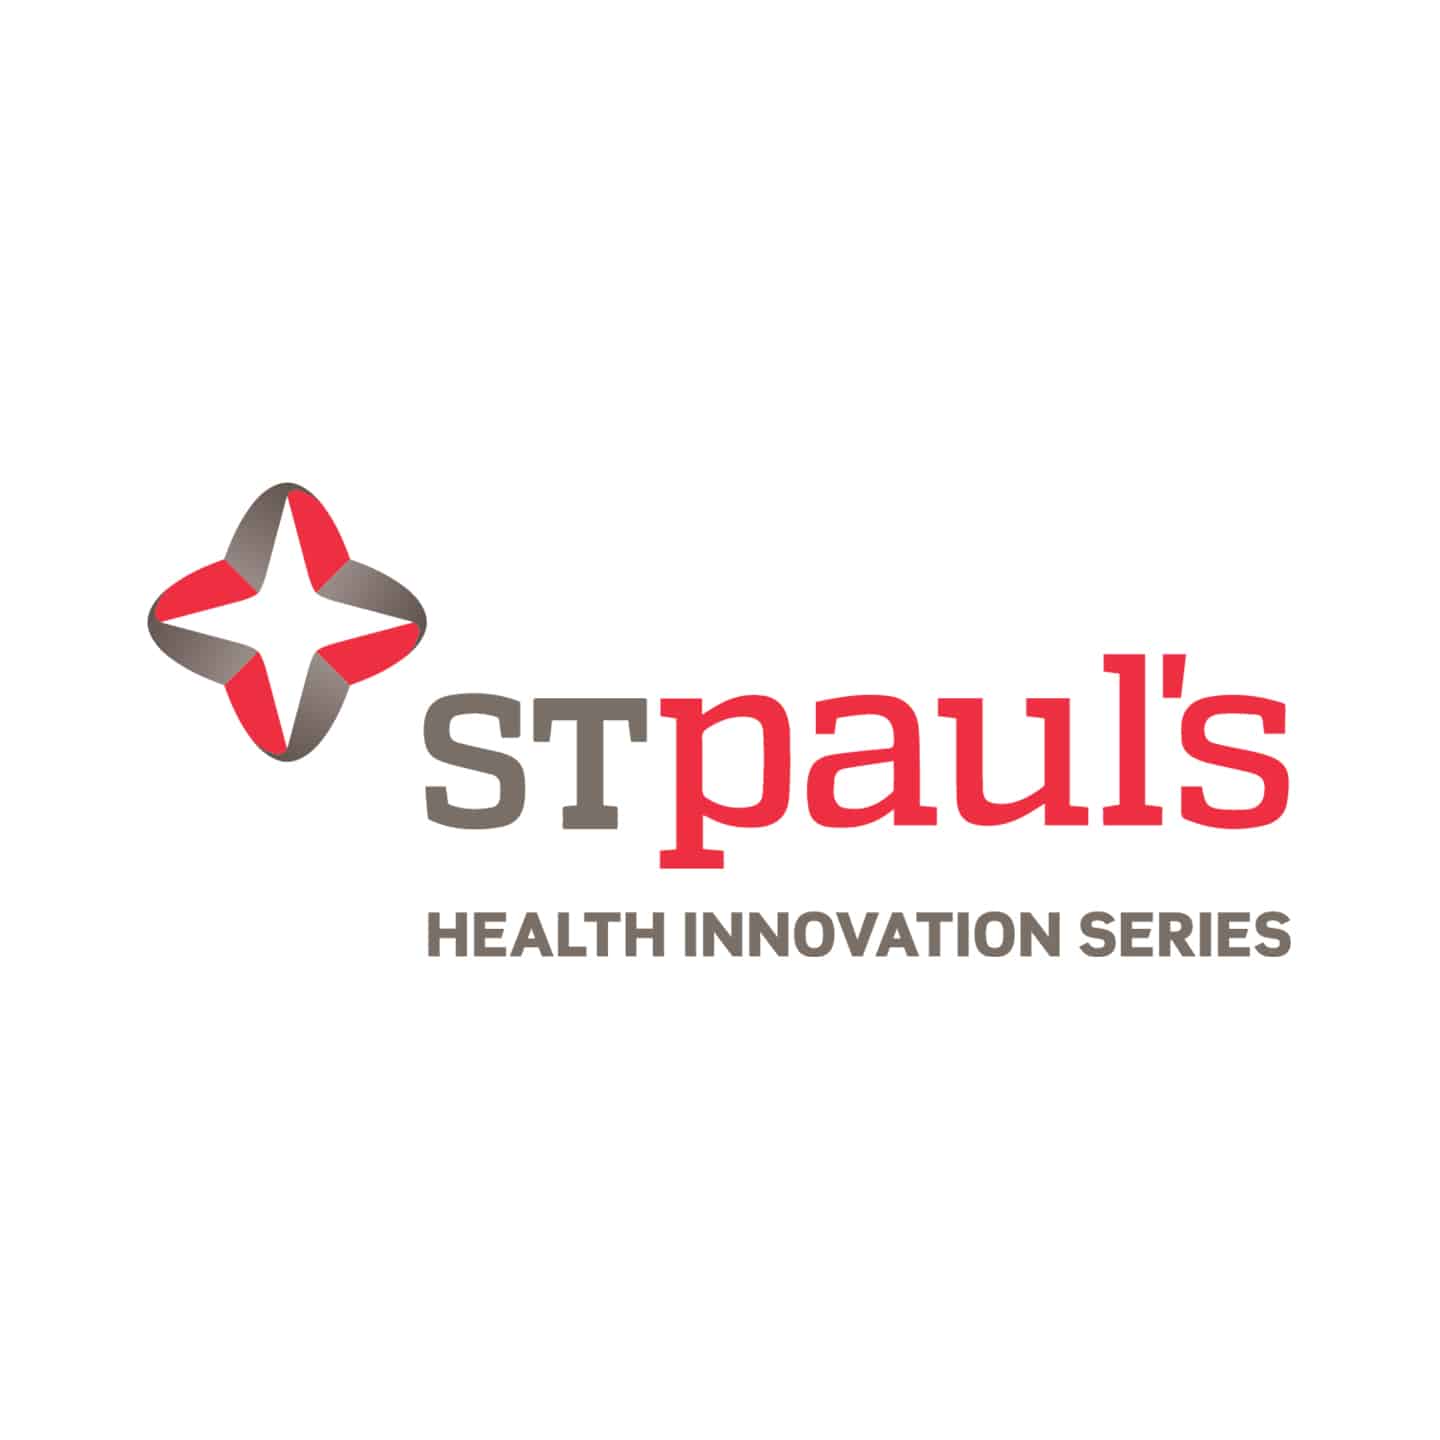 St. Paul's Health Innovation Series Logo